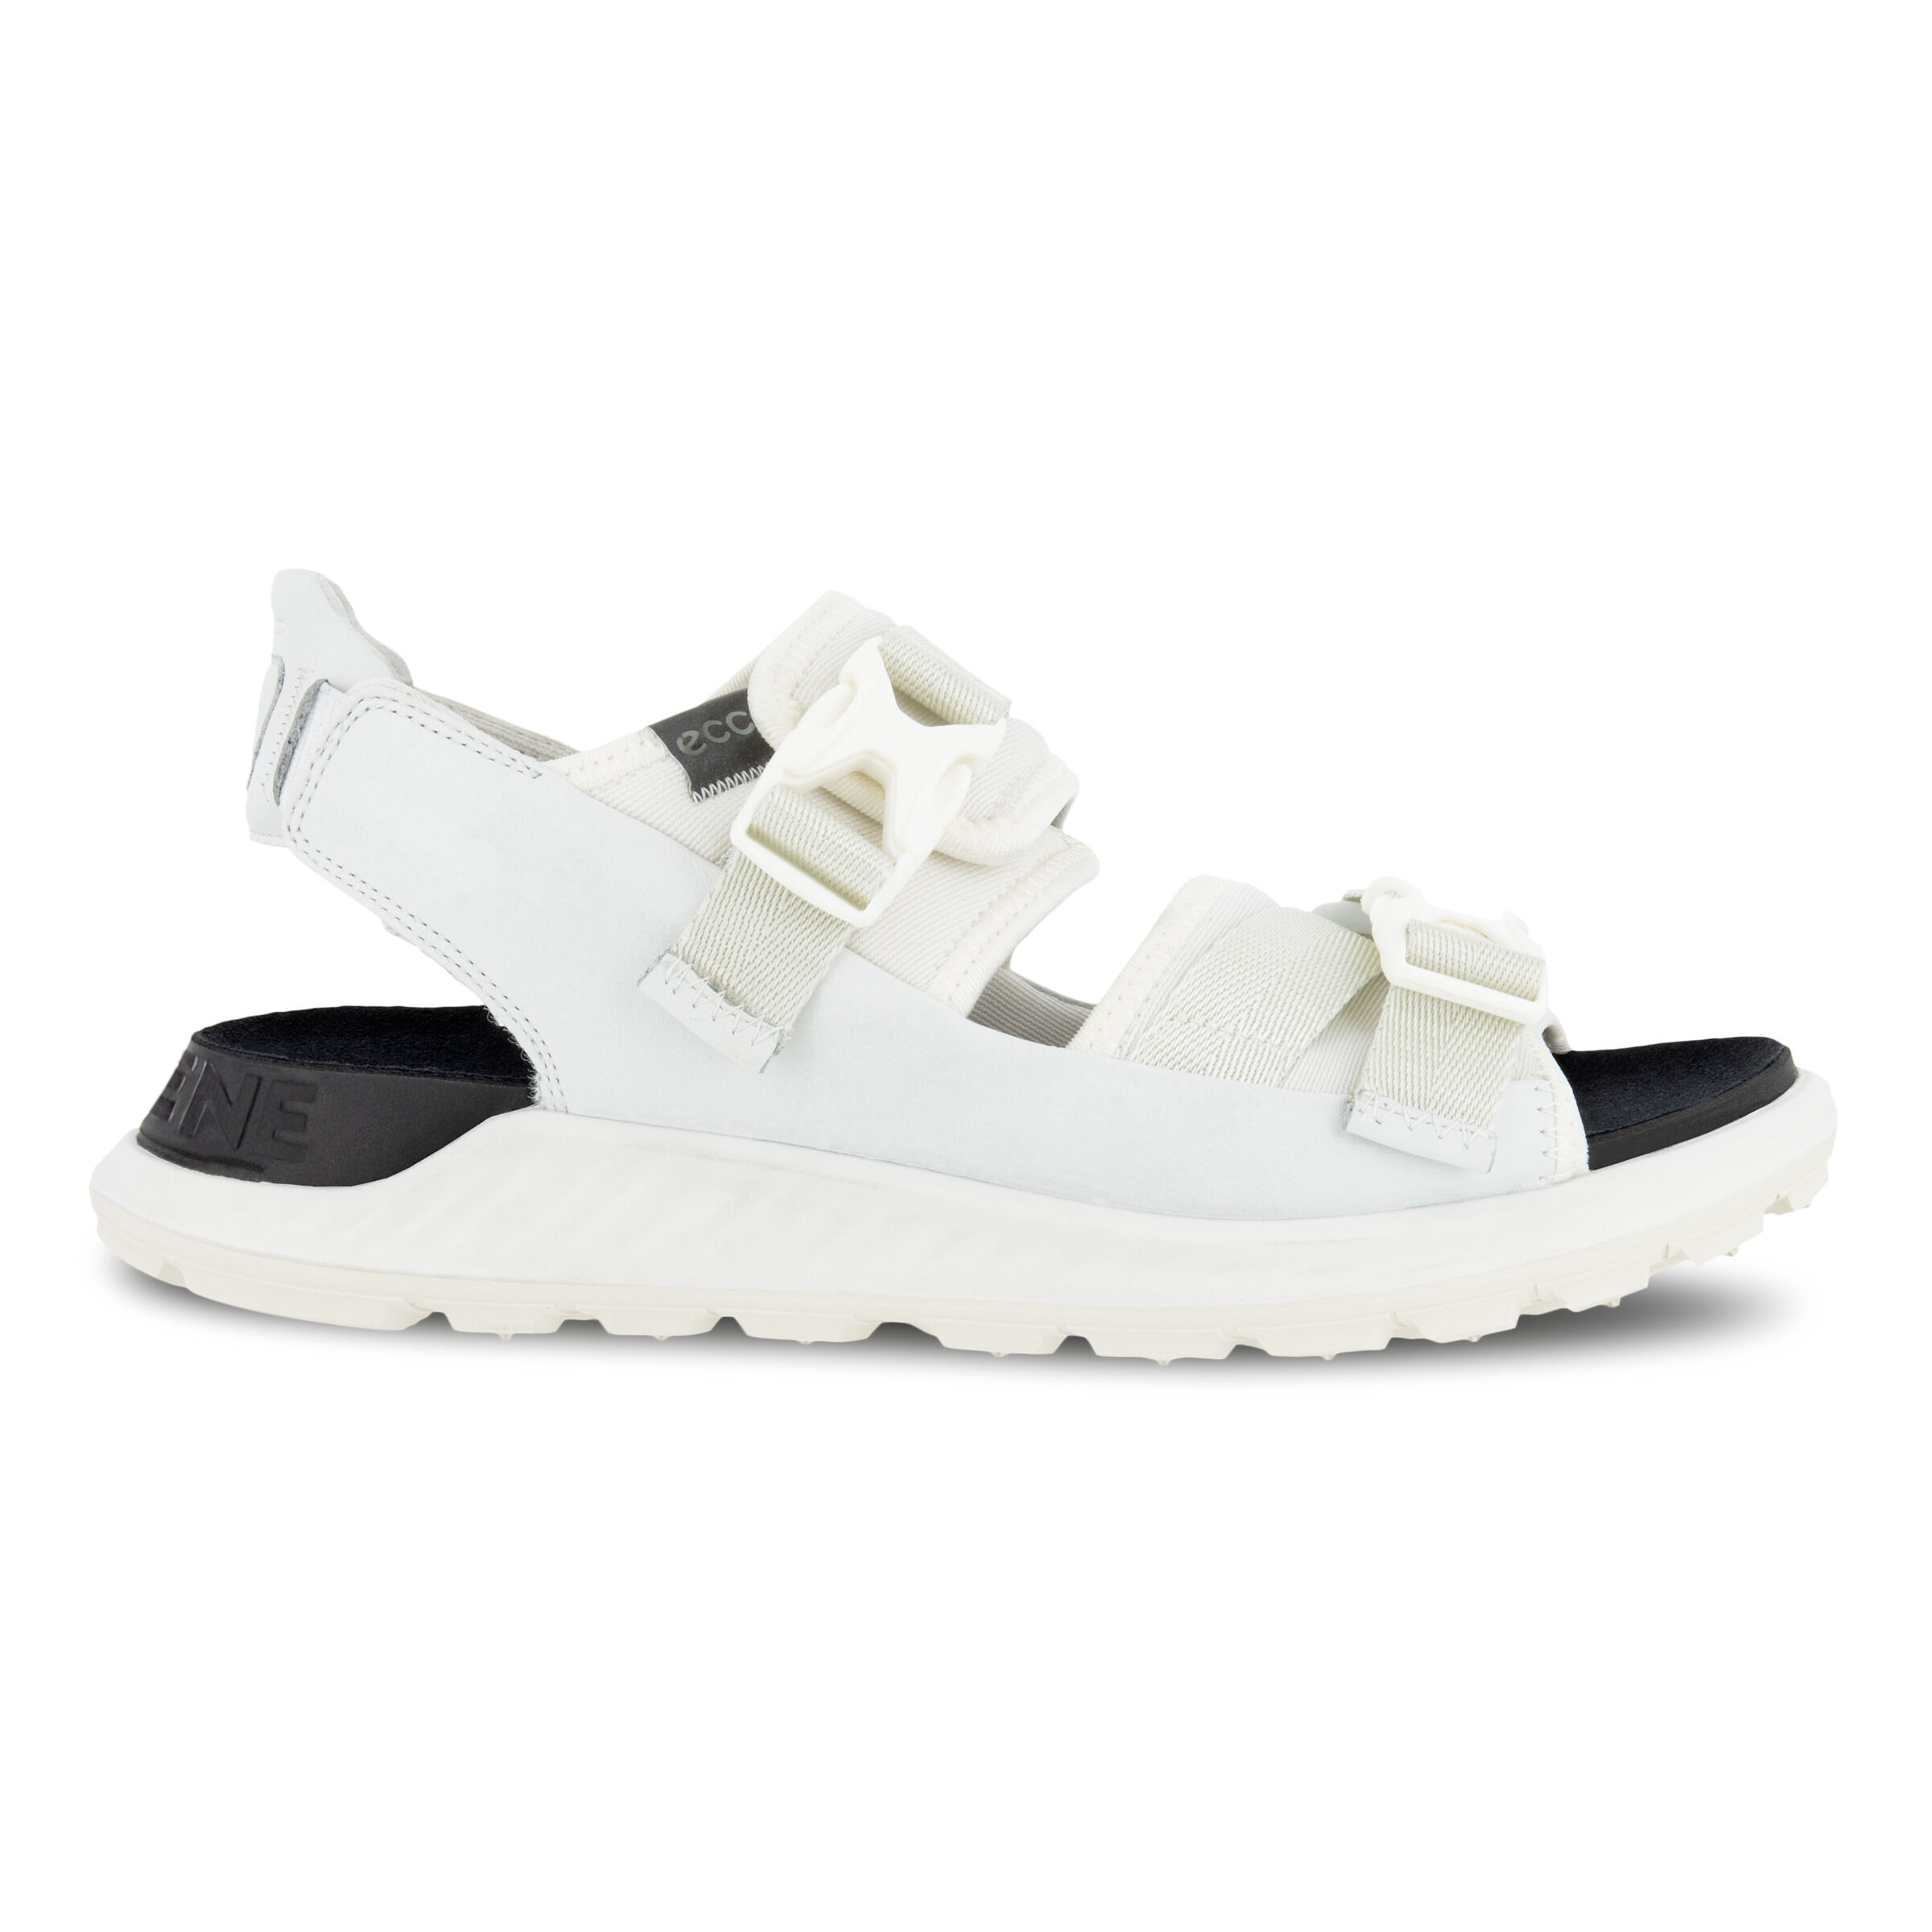 Sandals, Slippers \u0026 Slides | ECCO® Shoes